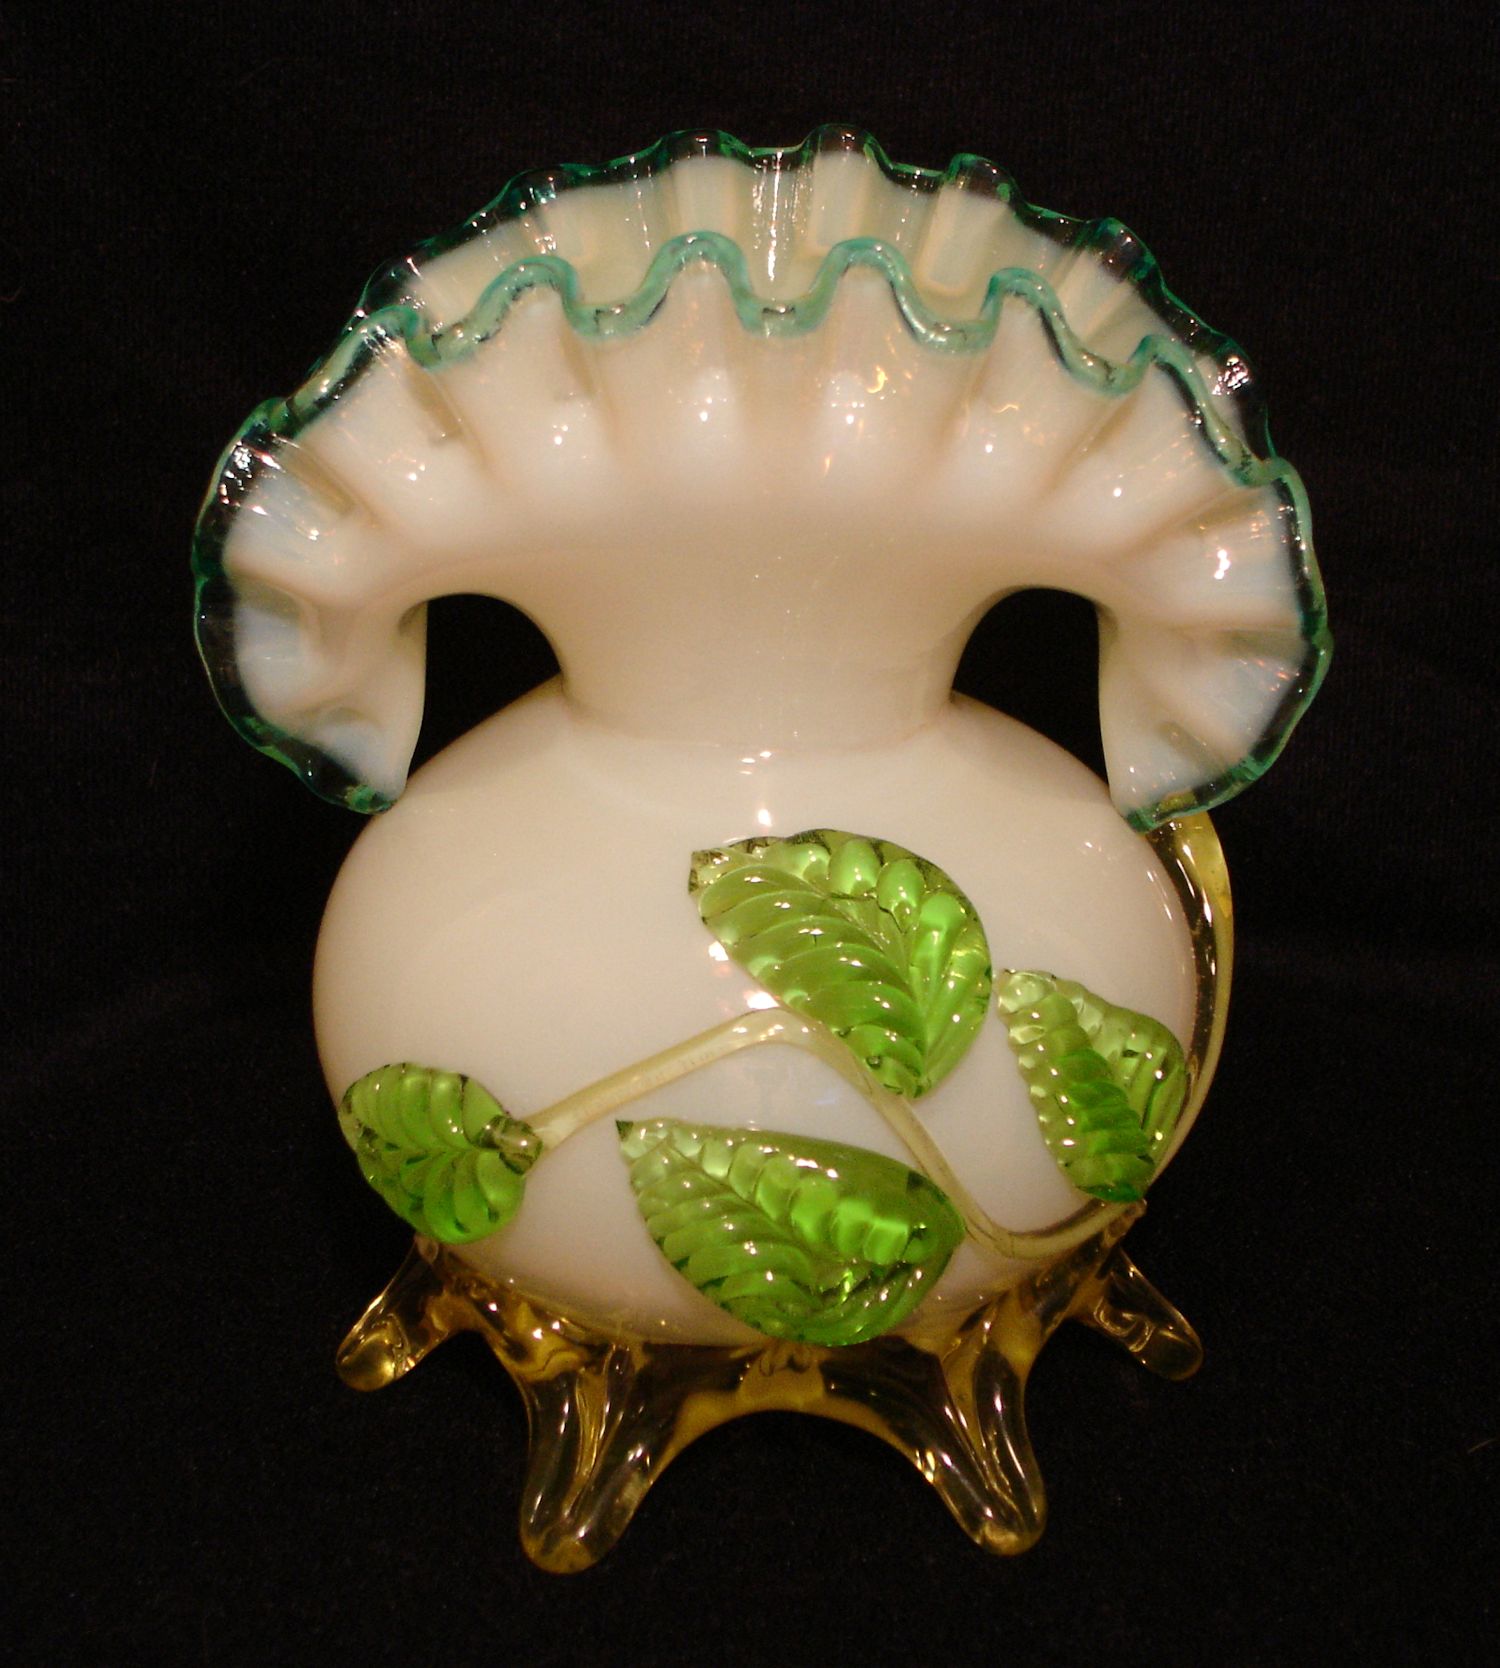 Antique Art Glass Vase